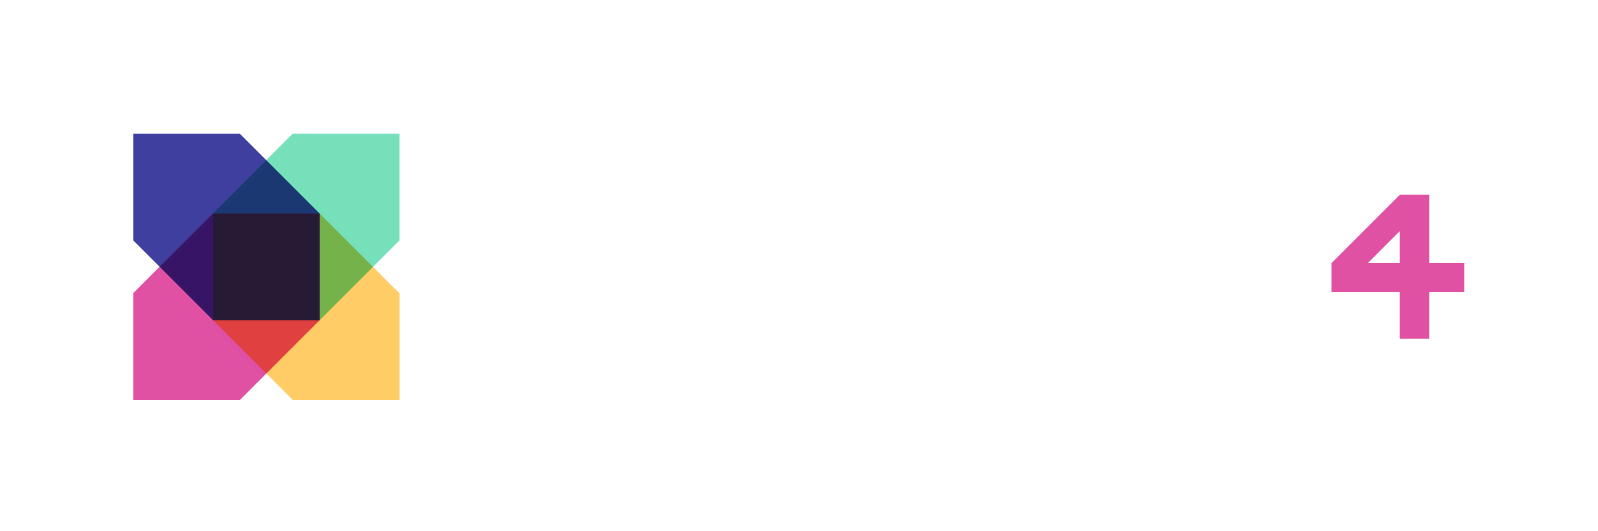 Connect4 logo Inverse